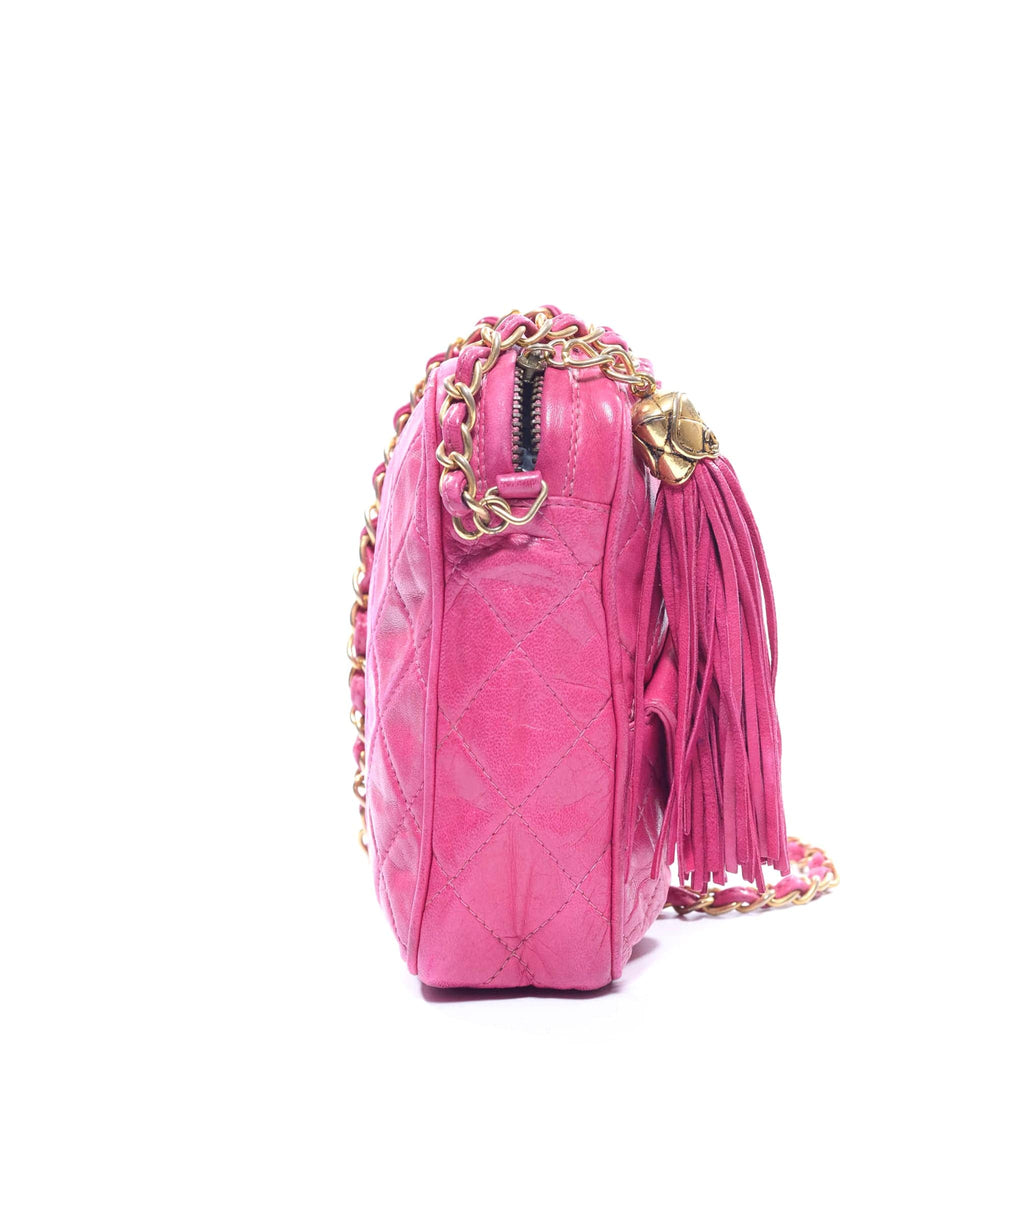 Chanel Backpack Handbags